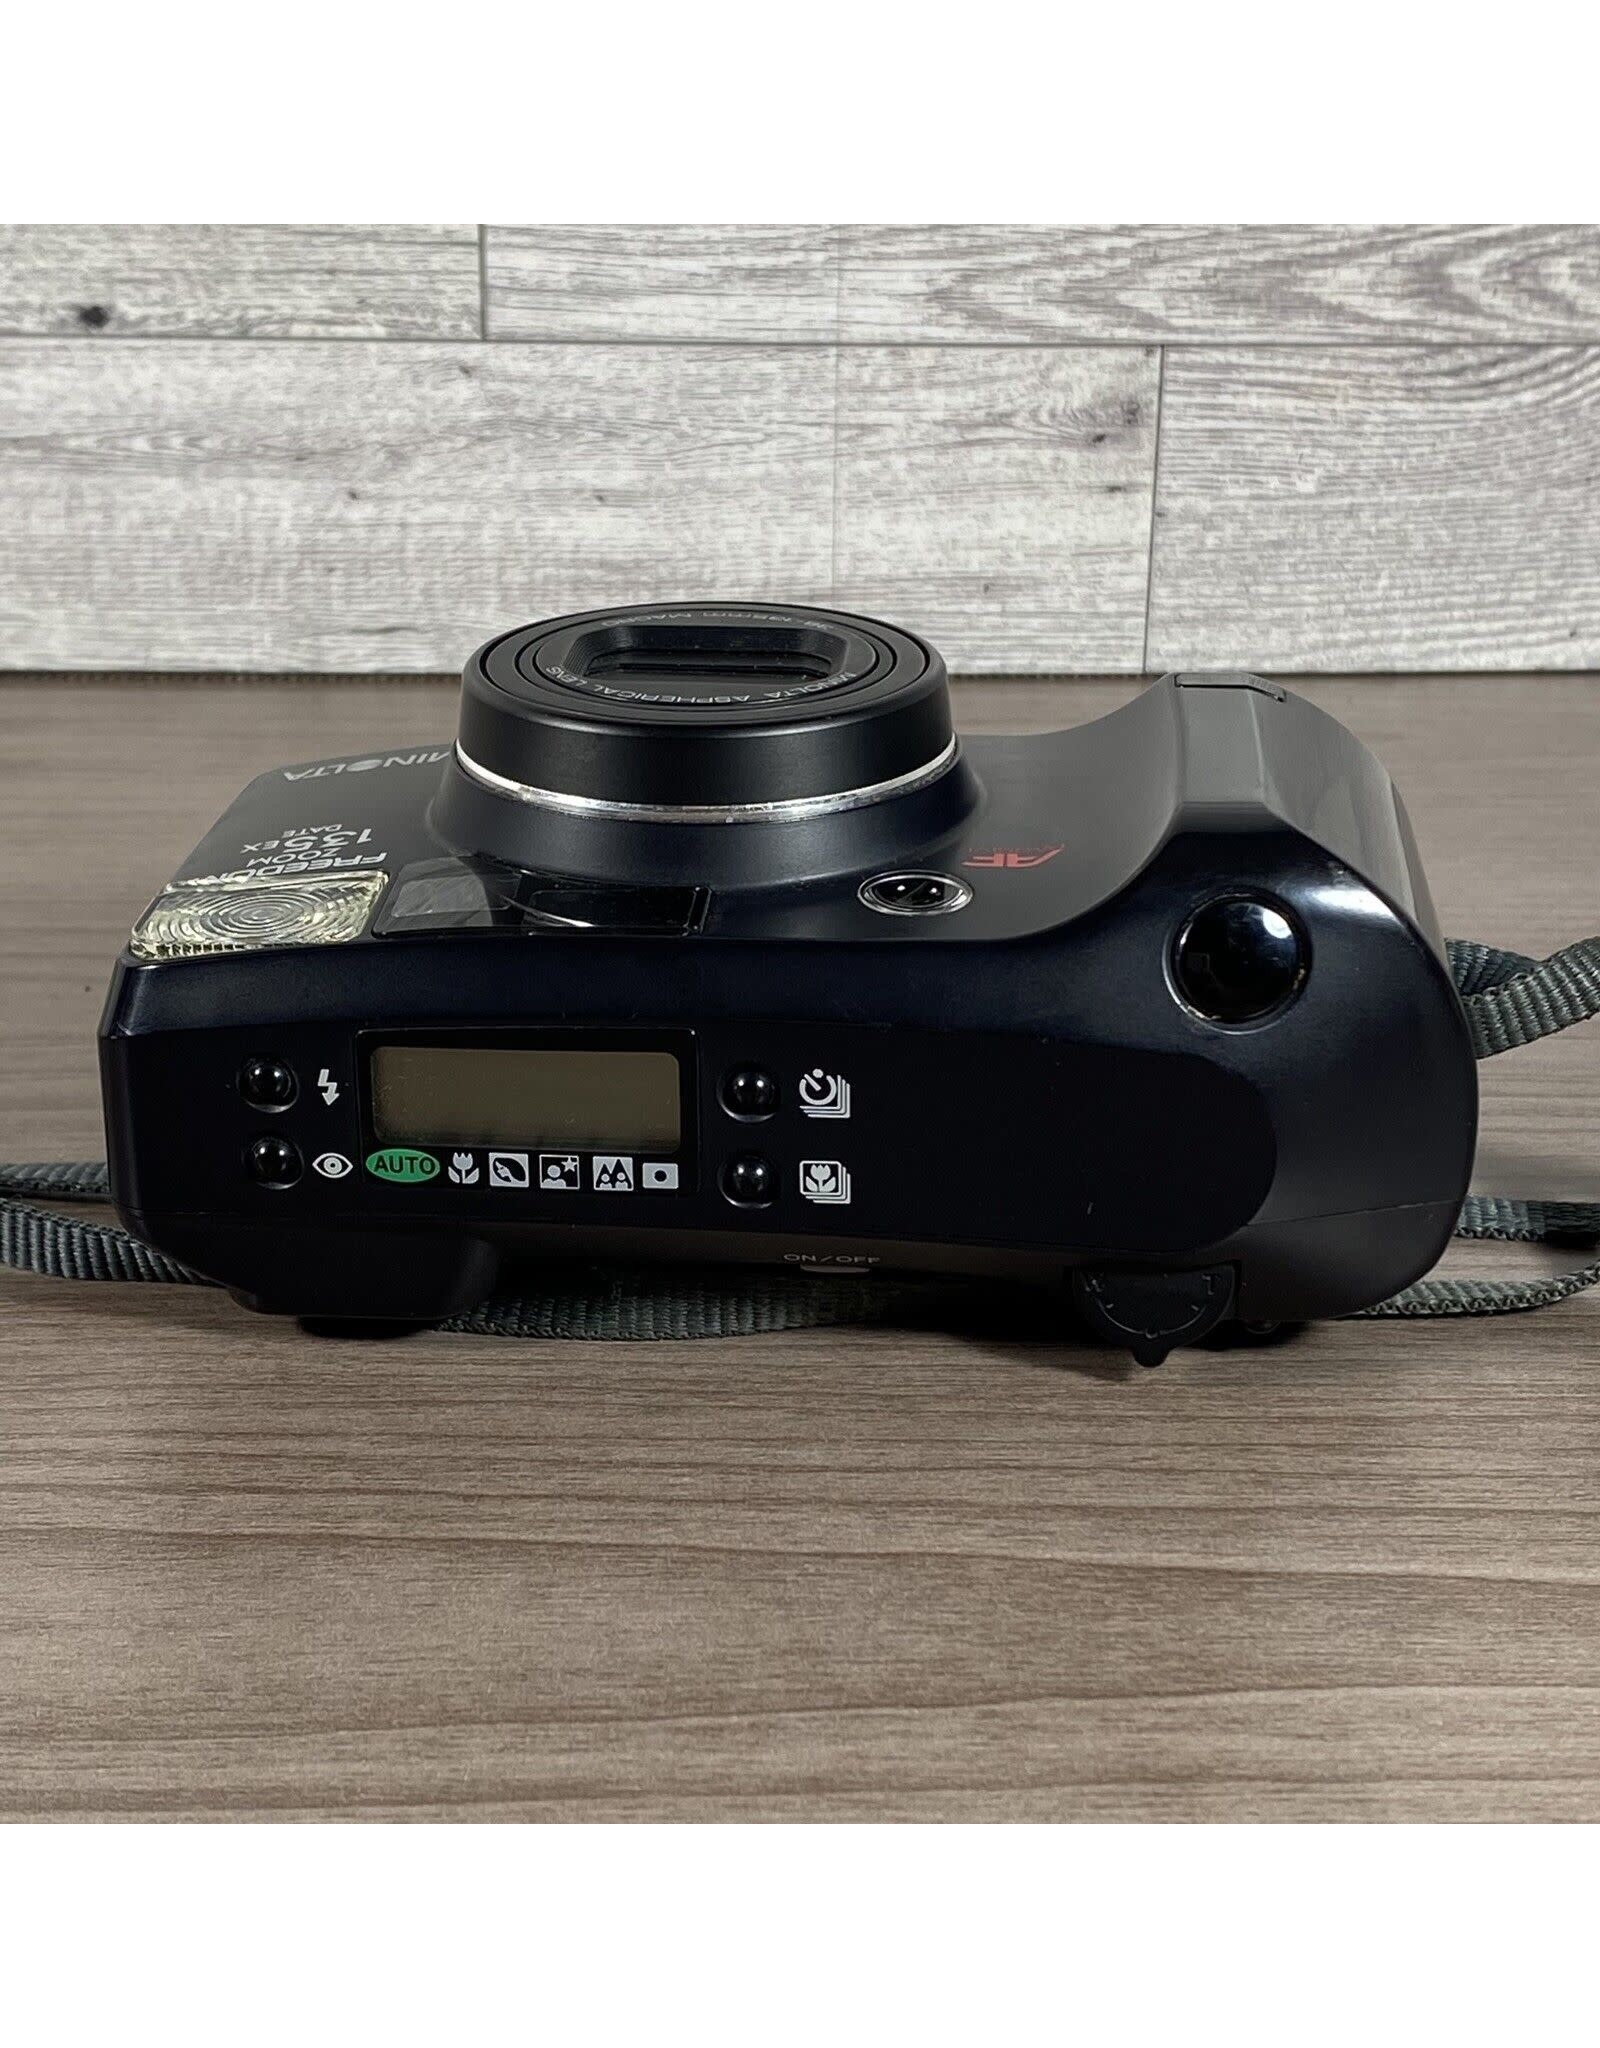 Konica Minolta Minolta Freedom Zoom 135 EX Date 35mm Point & Shoot Film Camera Black Tested (Pre-owned)